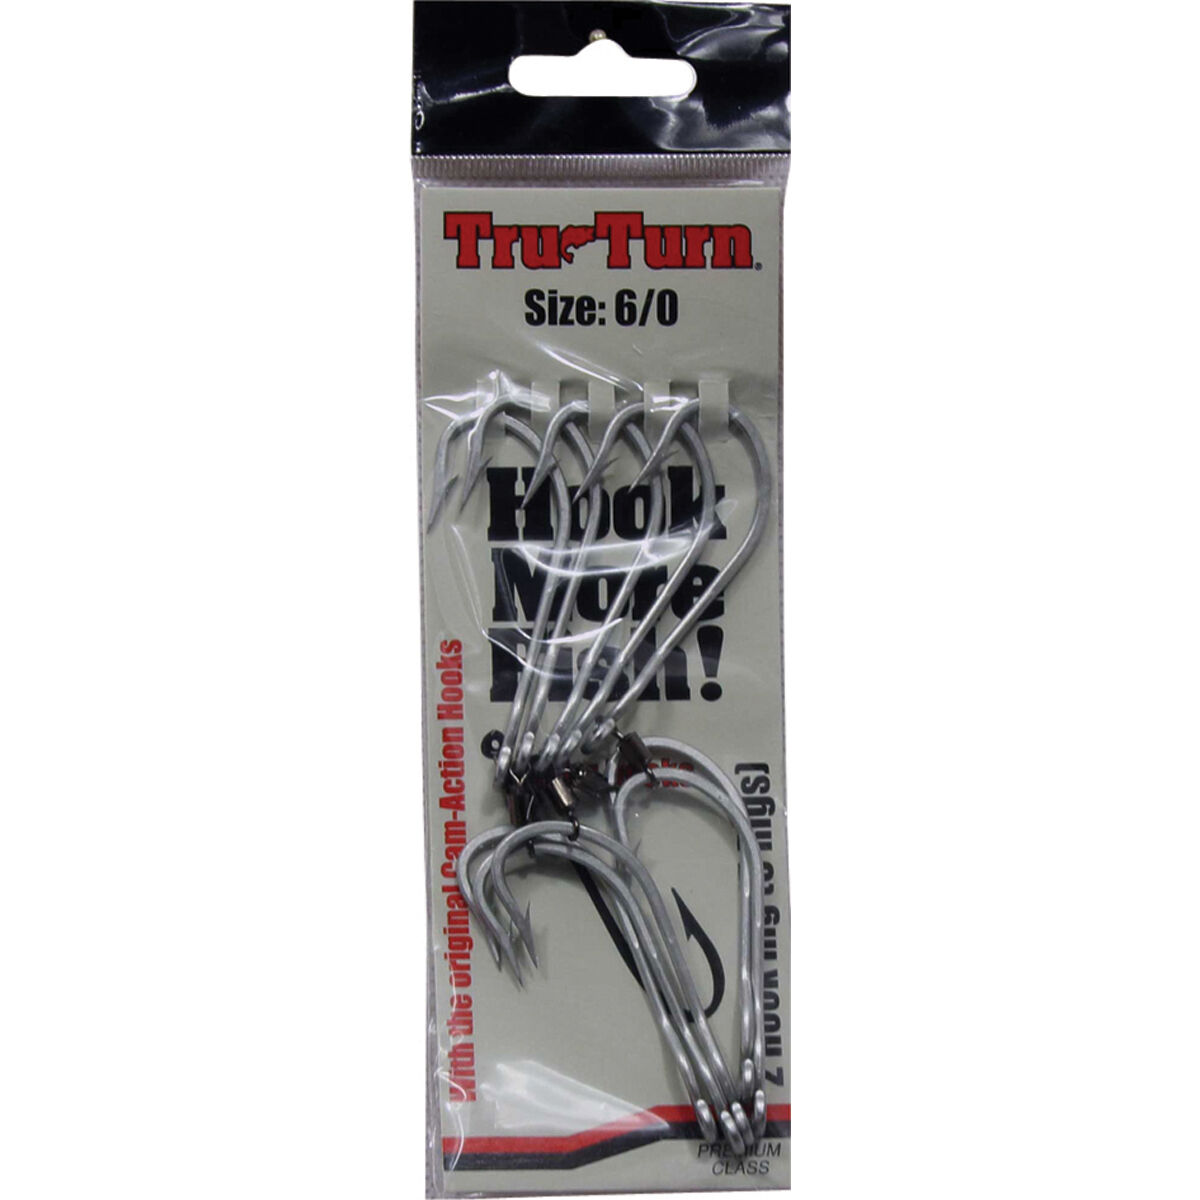 TRU TURN CATFISH hooks 722ZS fishing hooks Made in USA choose your size!  NIP $2.99 - PicClick